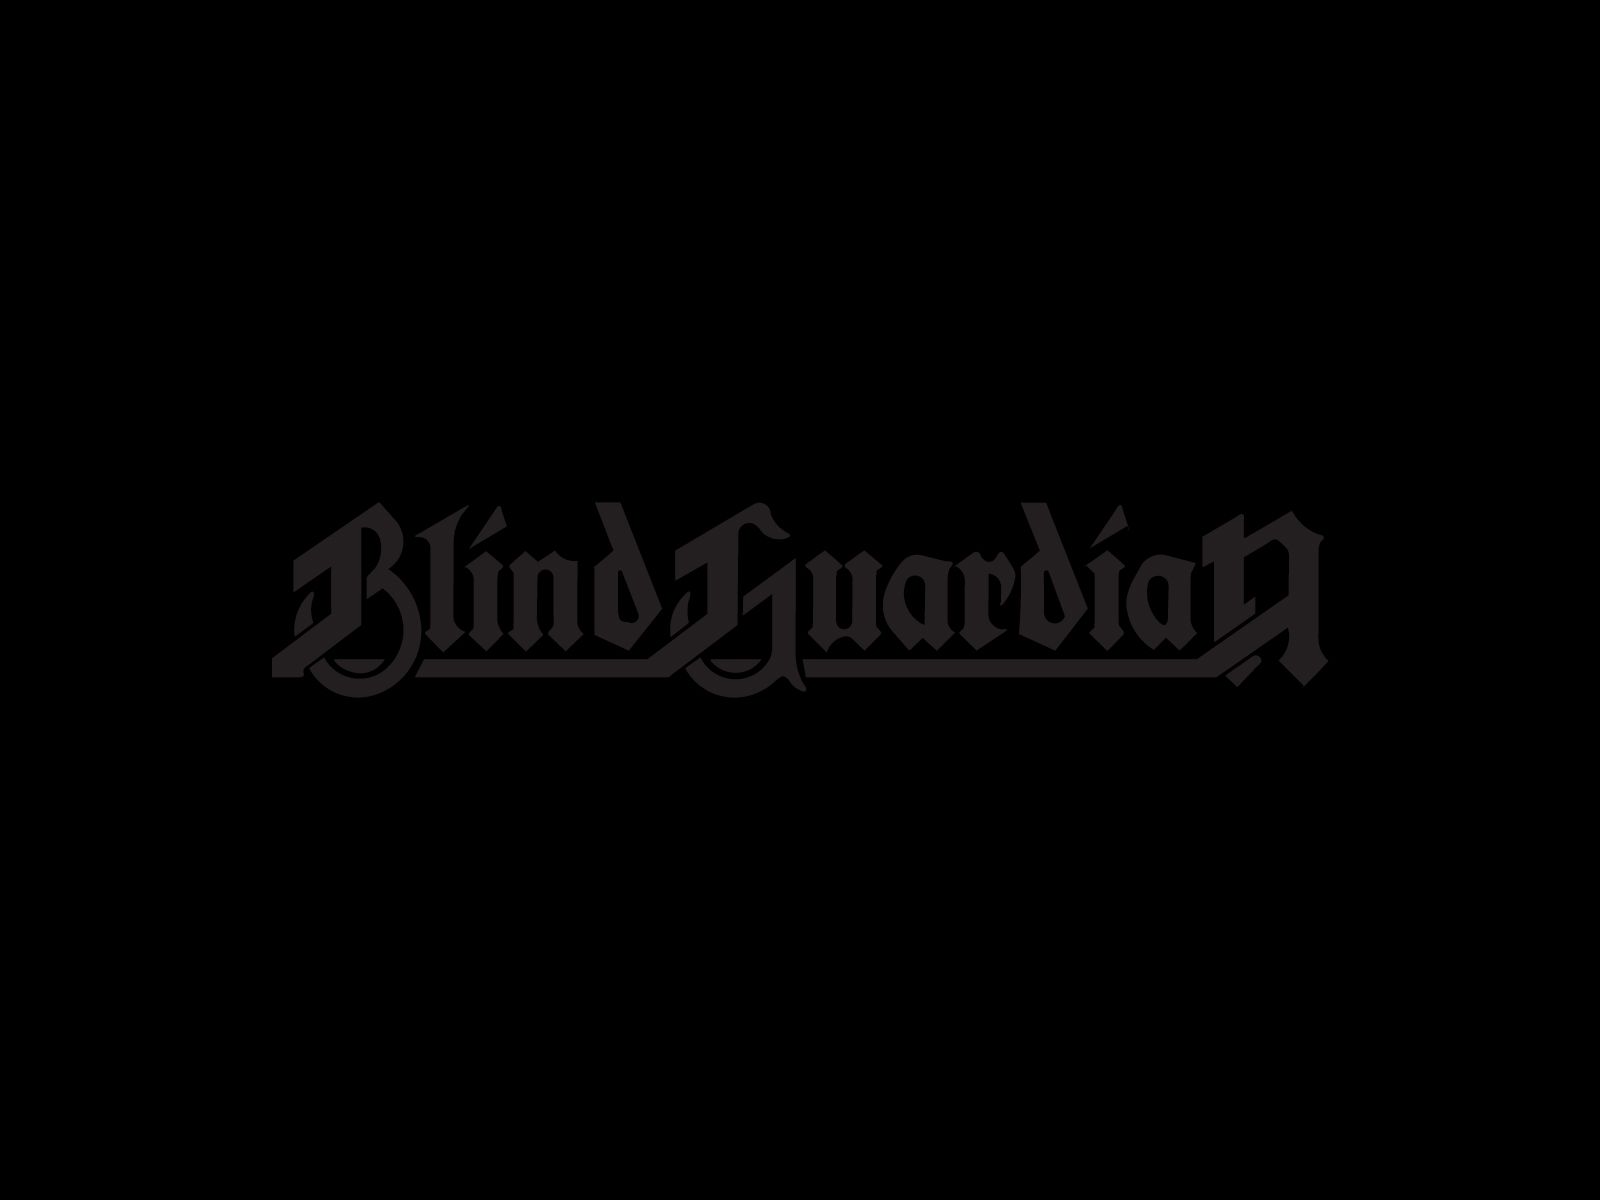 Blind Guardian logo and wallpaper | Band logos - Rock band logos ...